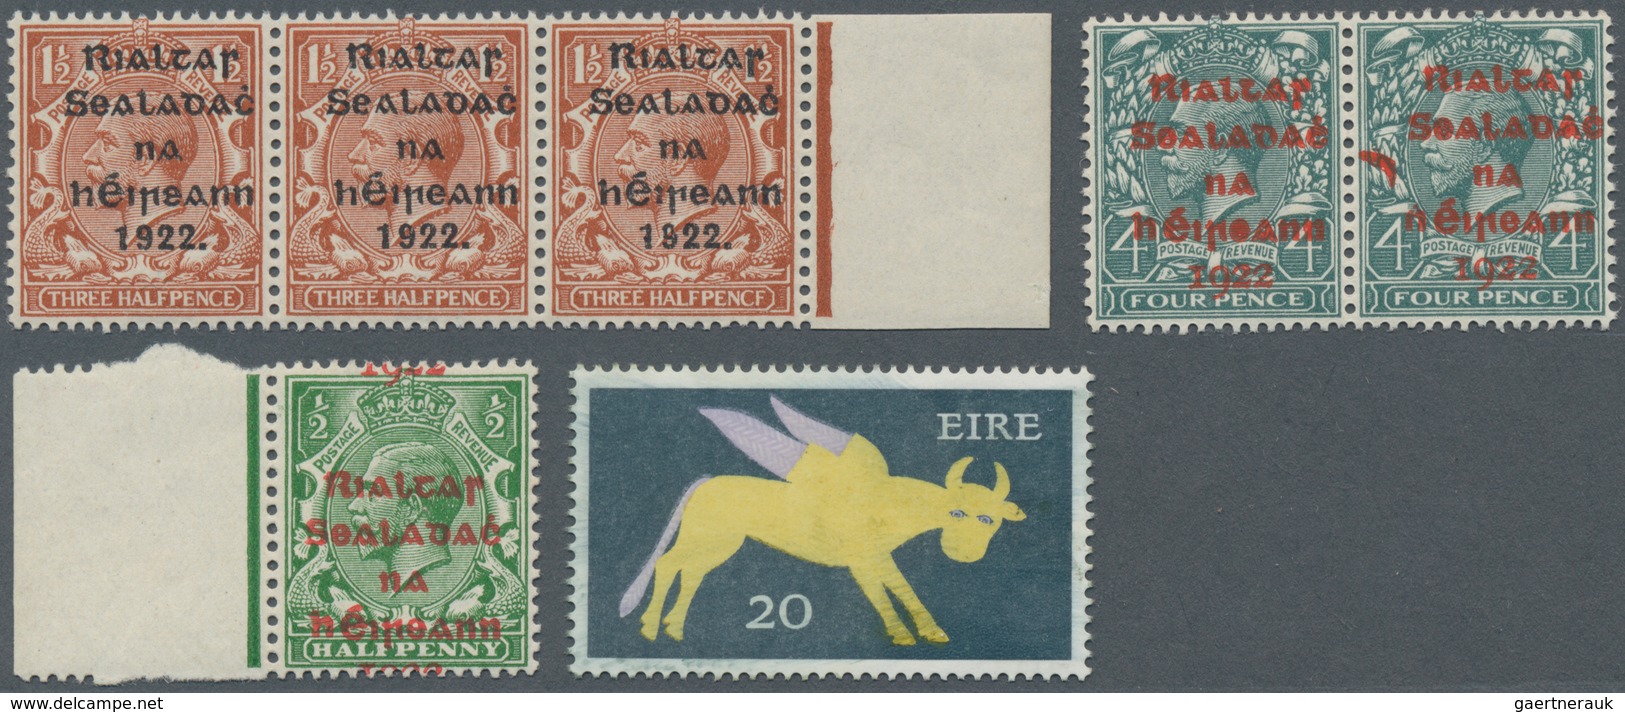 Irland: 1922/1971, Mint Assortment Of Varieties Incl. Proof PR9 Marginal Copy, T10d "banana Flaw" Wi - Briefe U. Dokumente